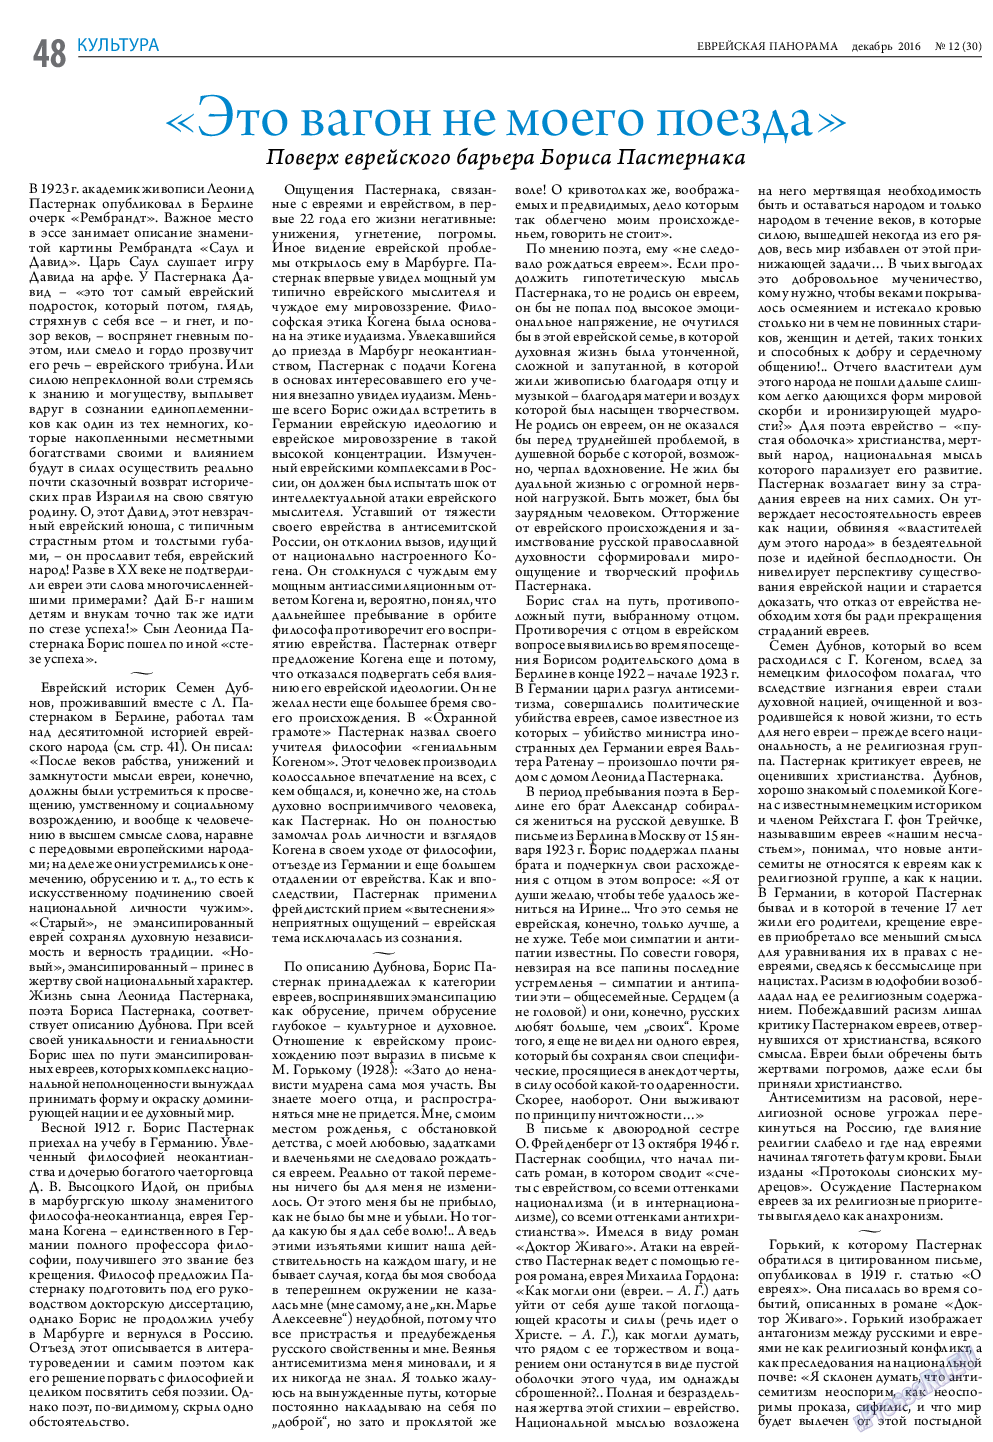 Еврейская панорама, газета. 2016 №12 стр.48